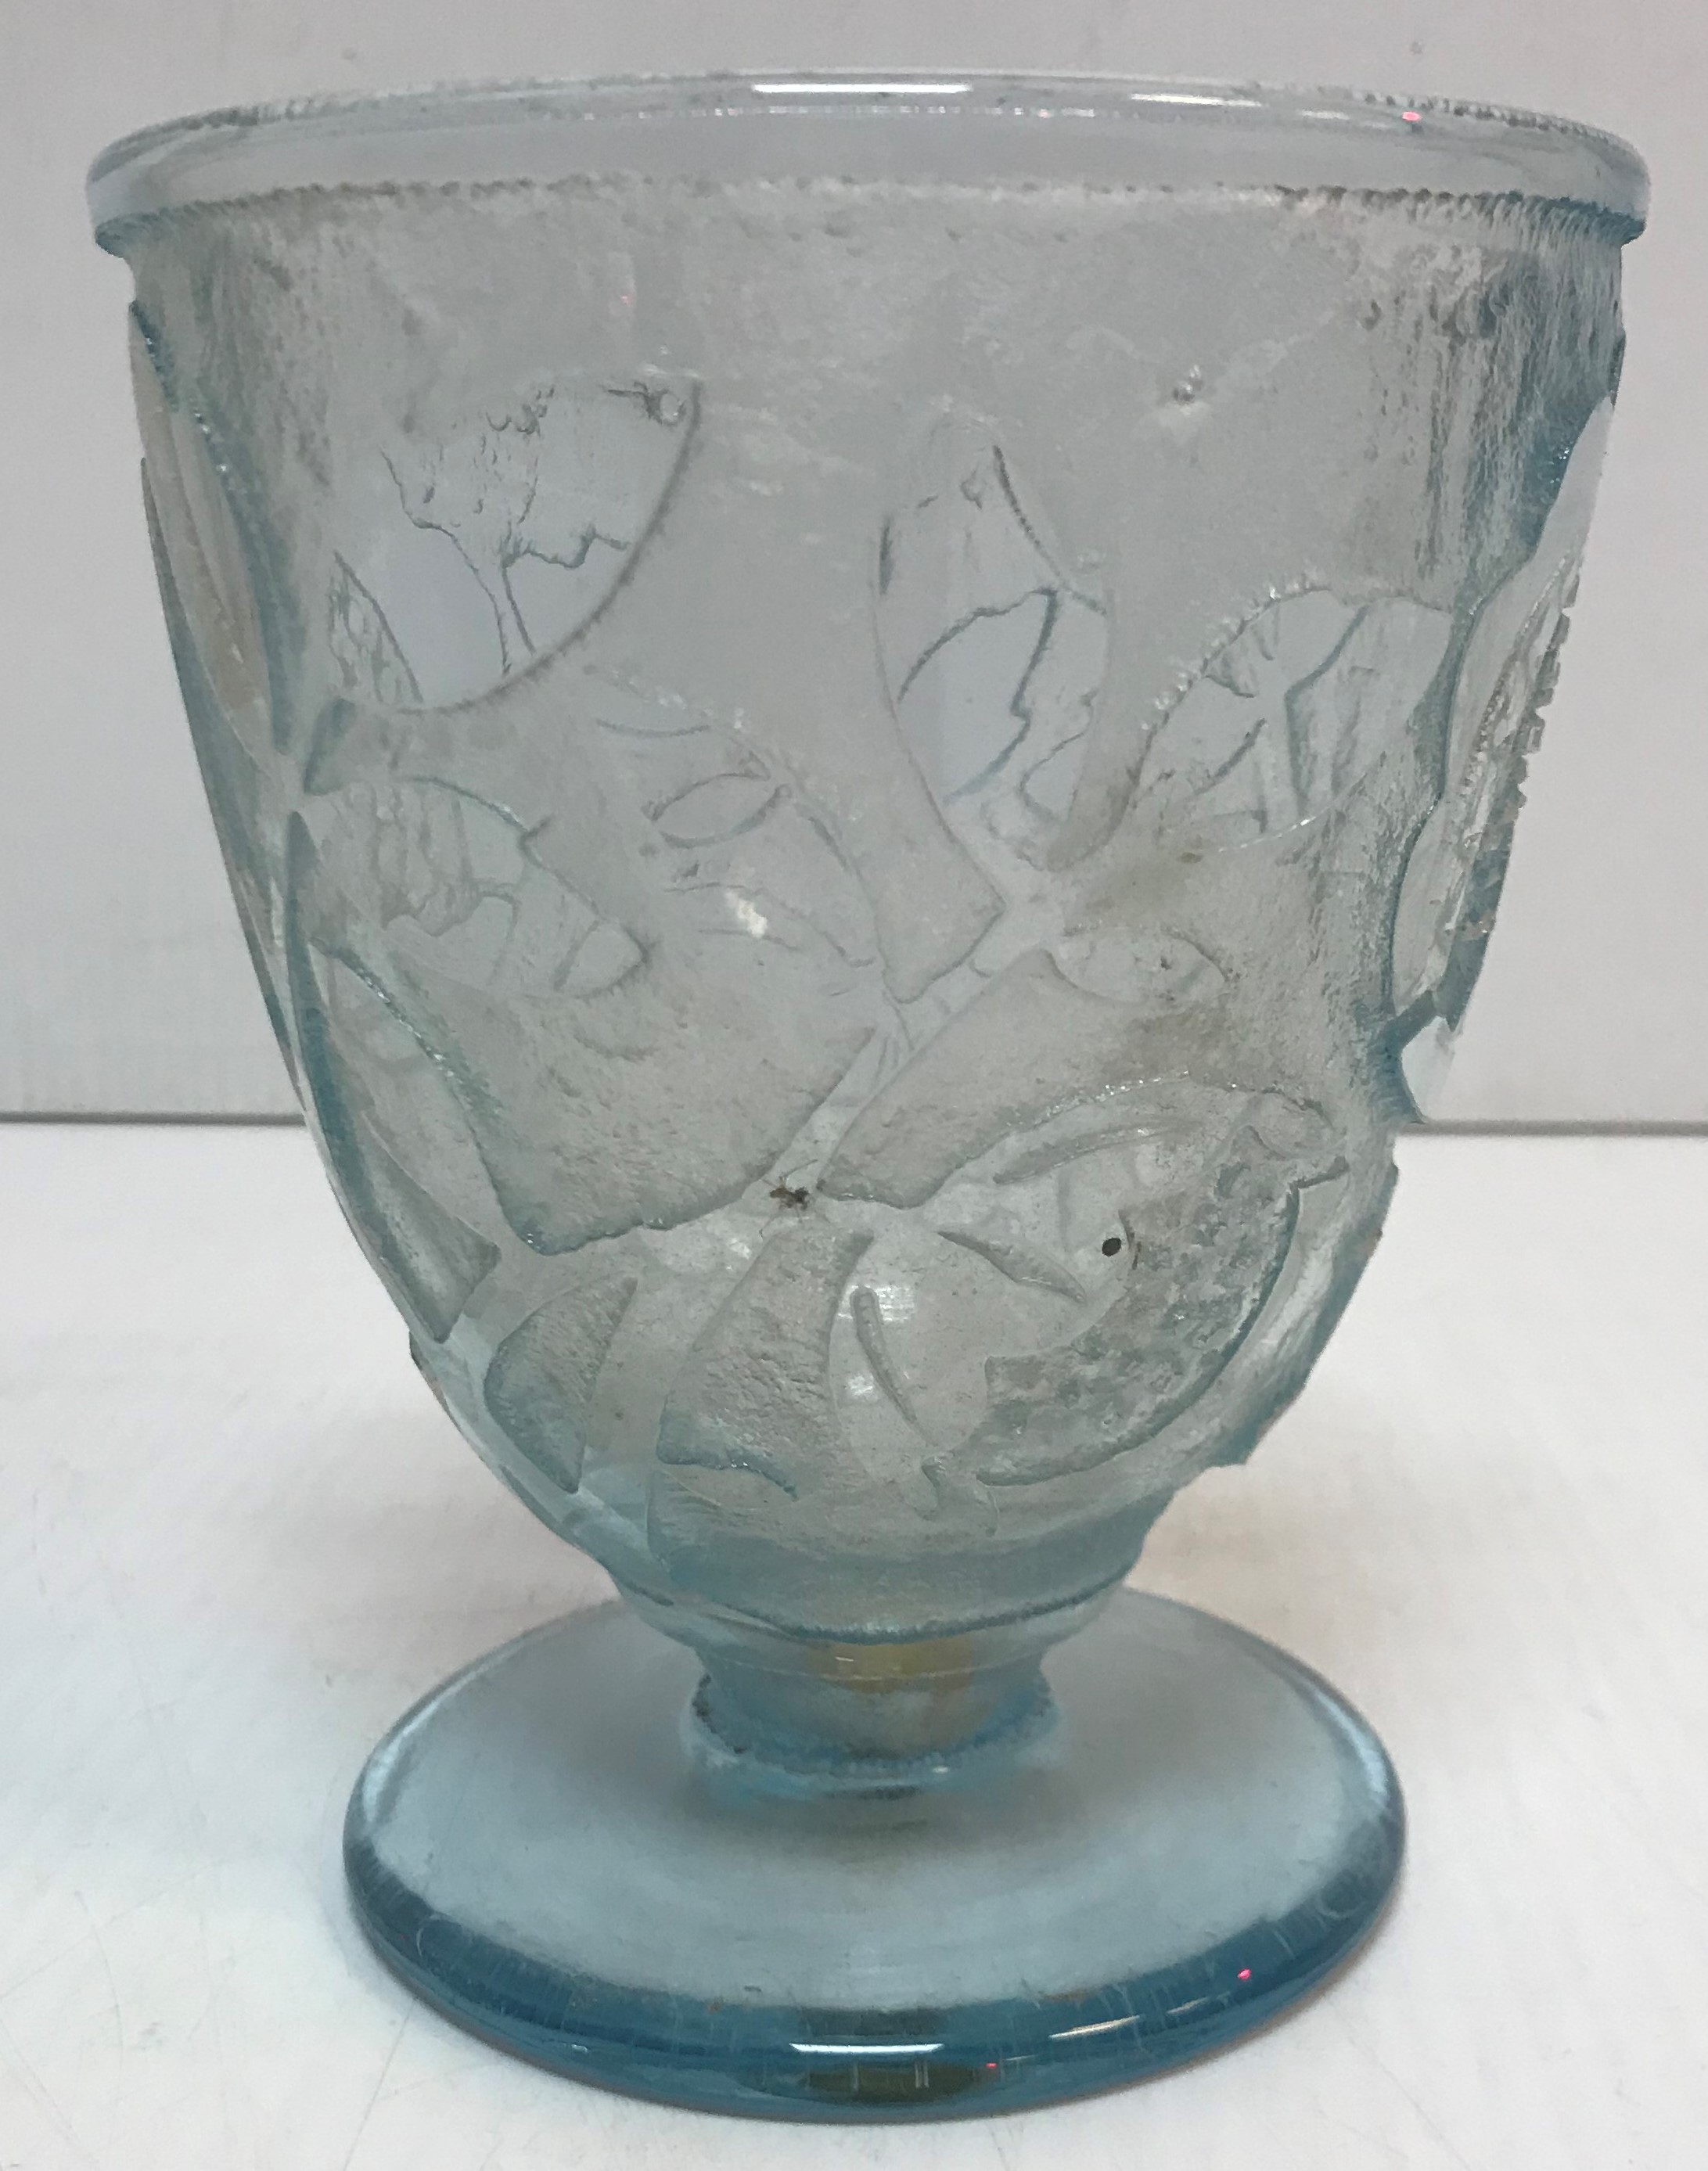 A Daume Nancy cut glass vase depicting stylised flowers, raised on a circular pedestal foot,